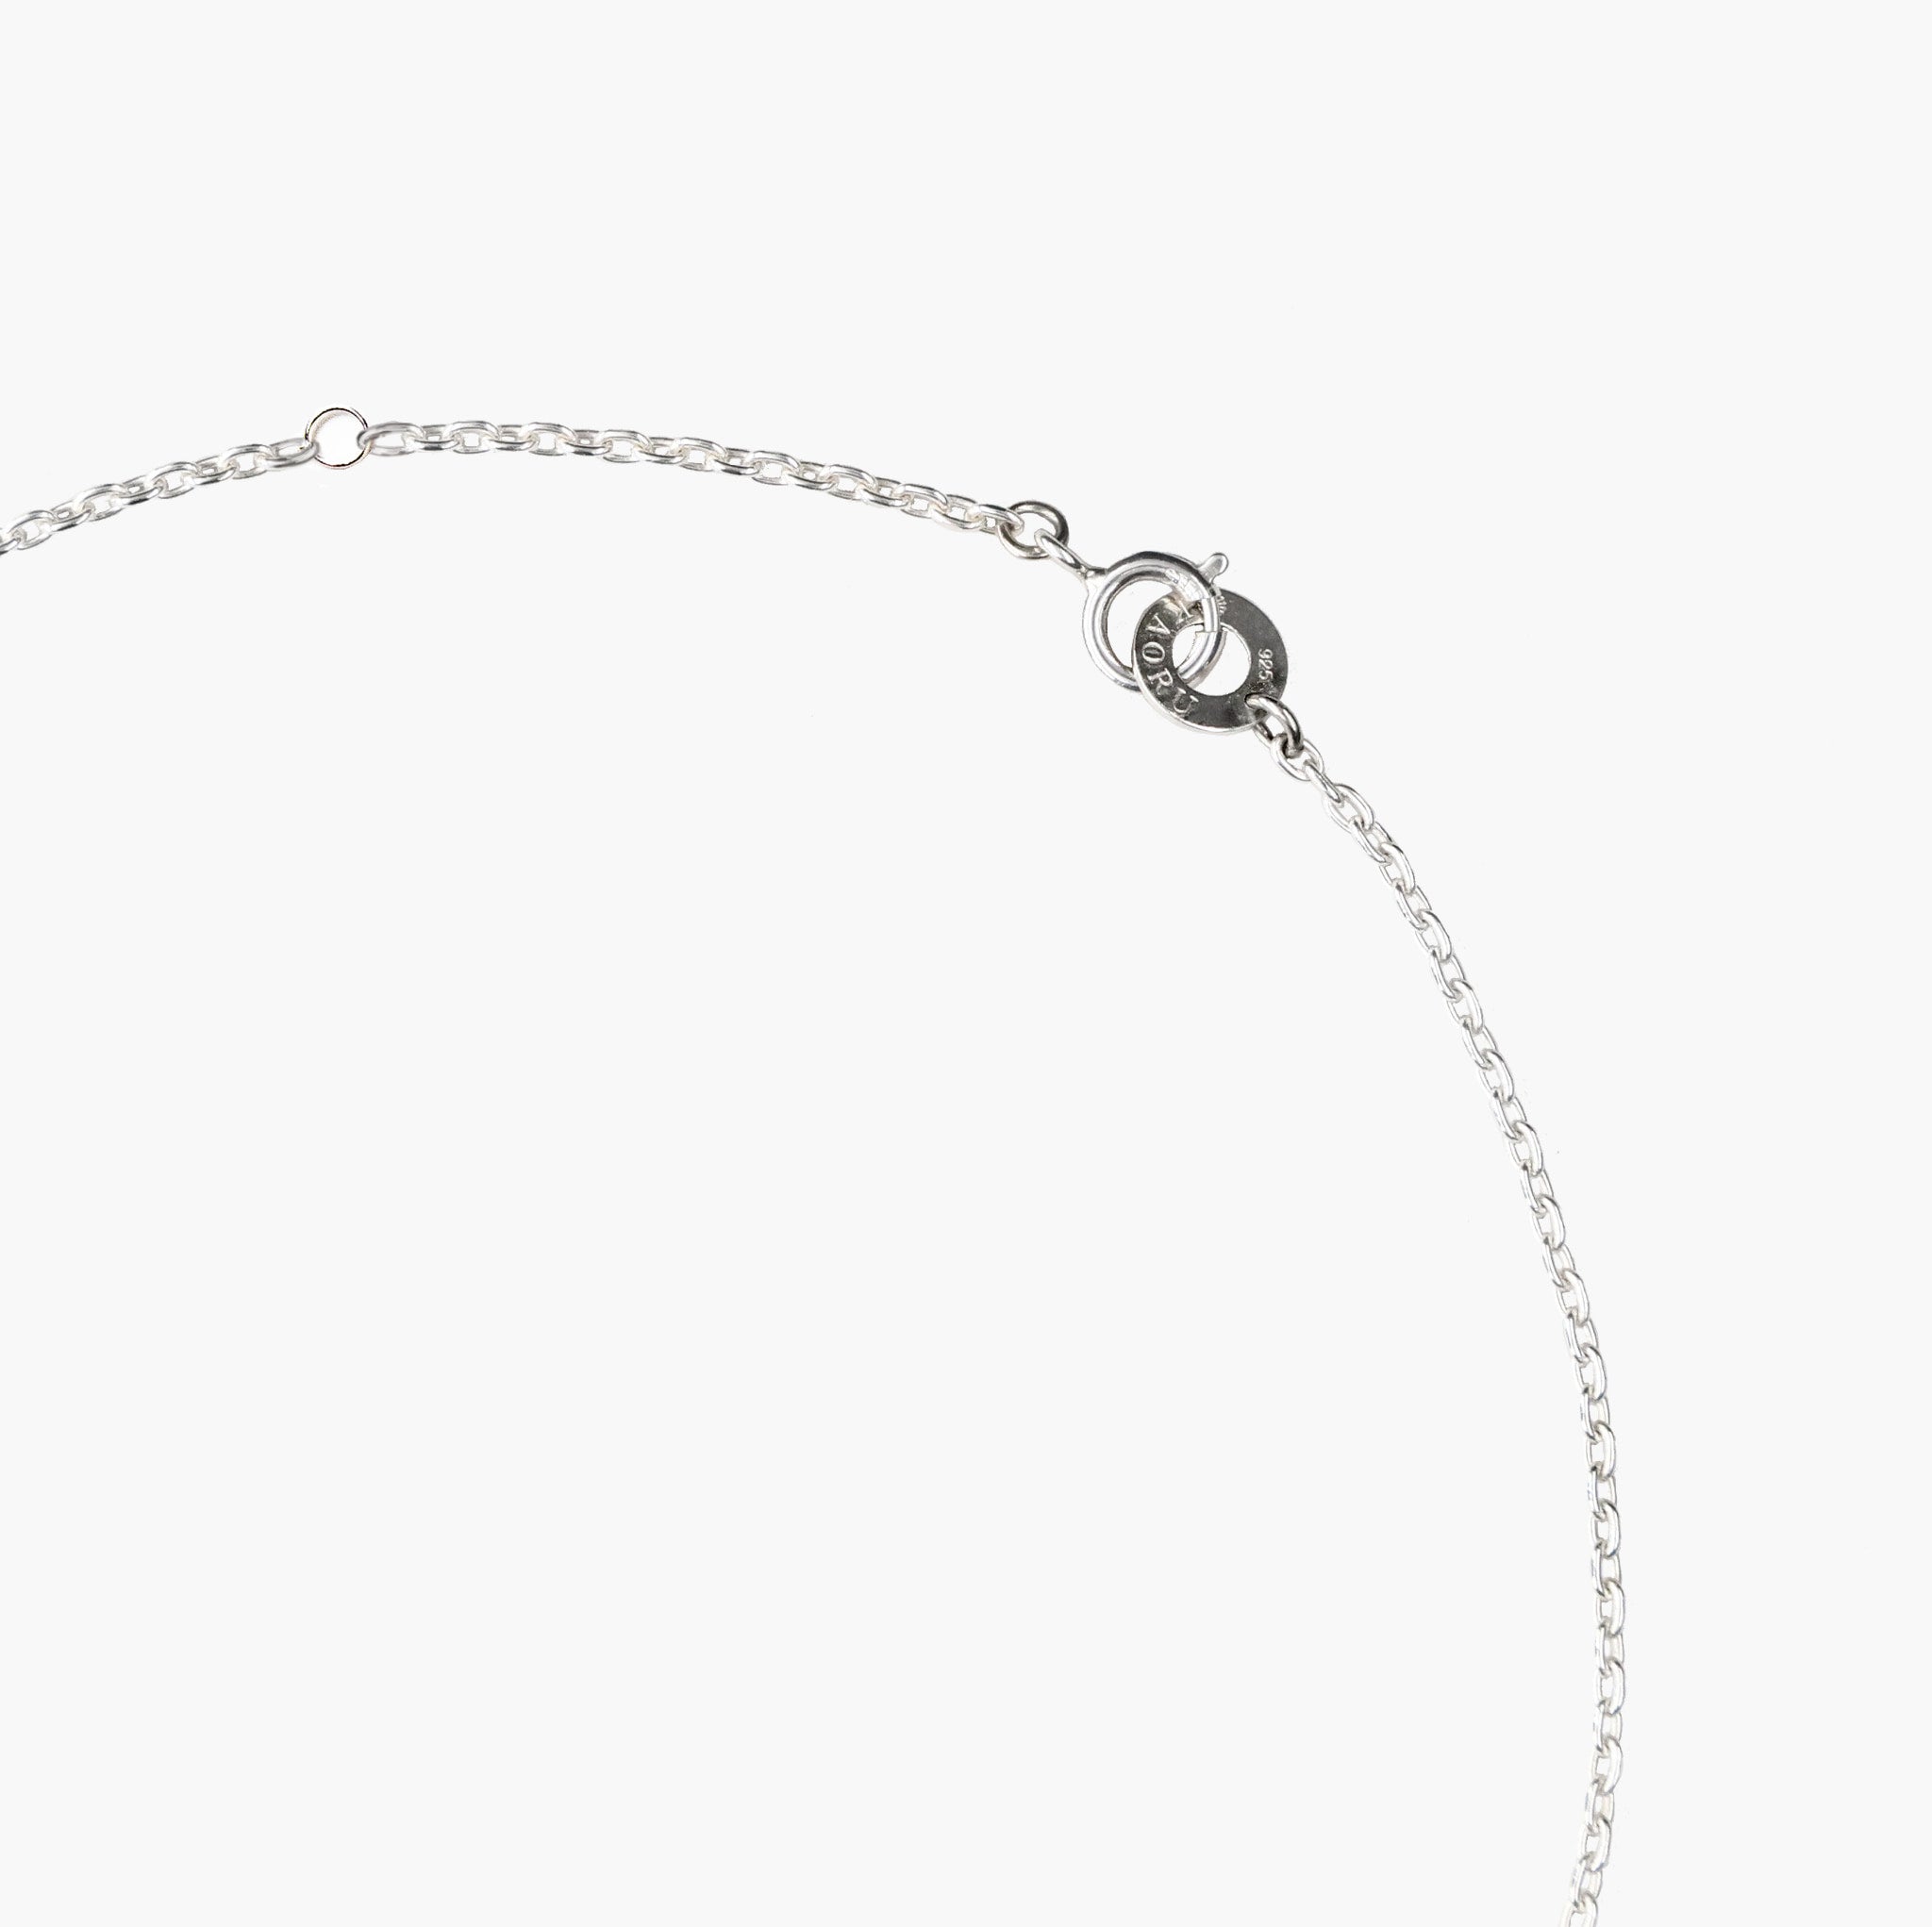 Modelo chain necklace 45/silver